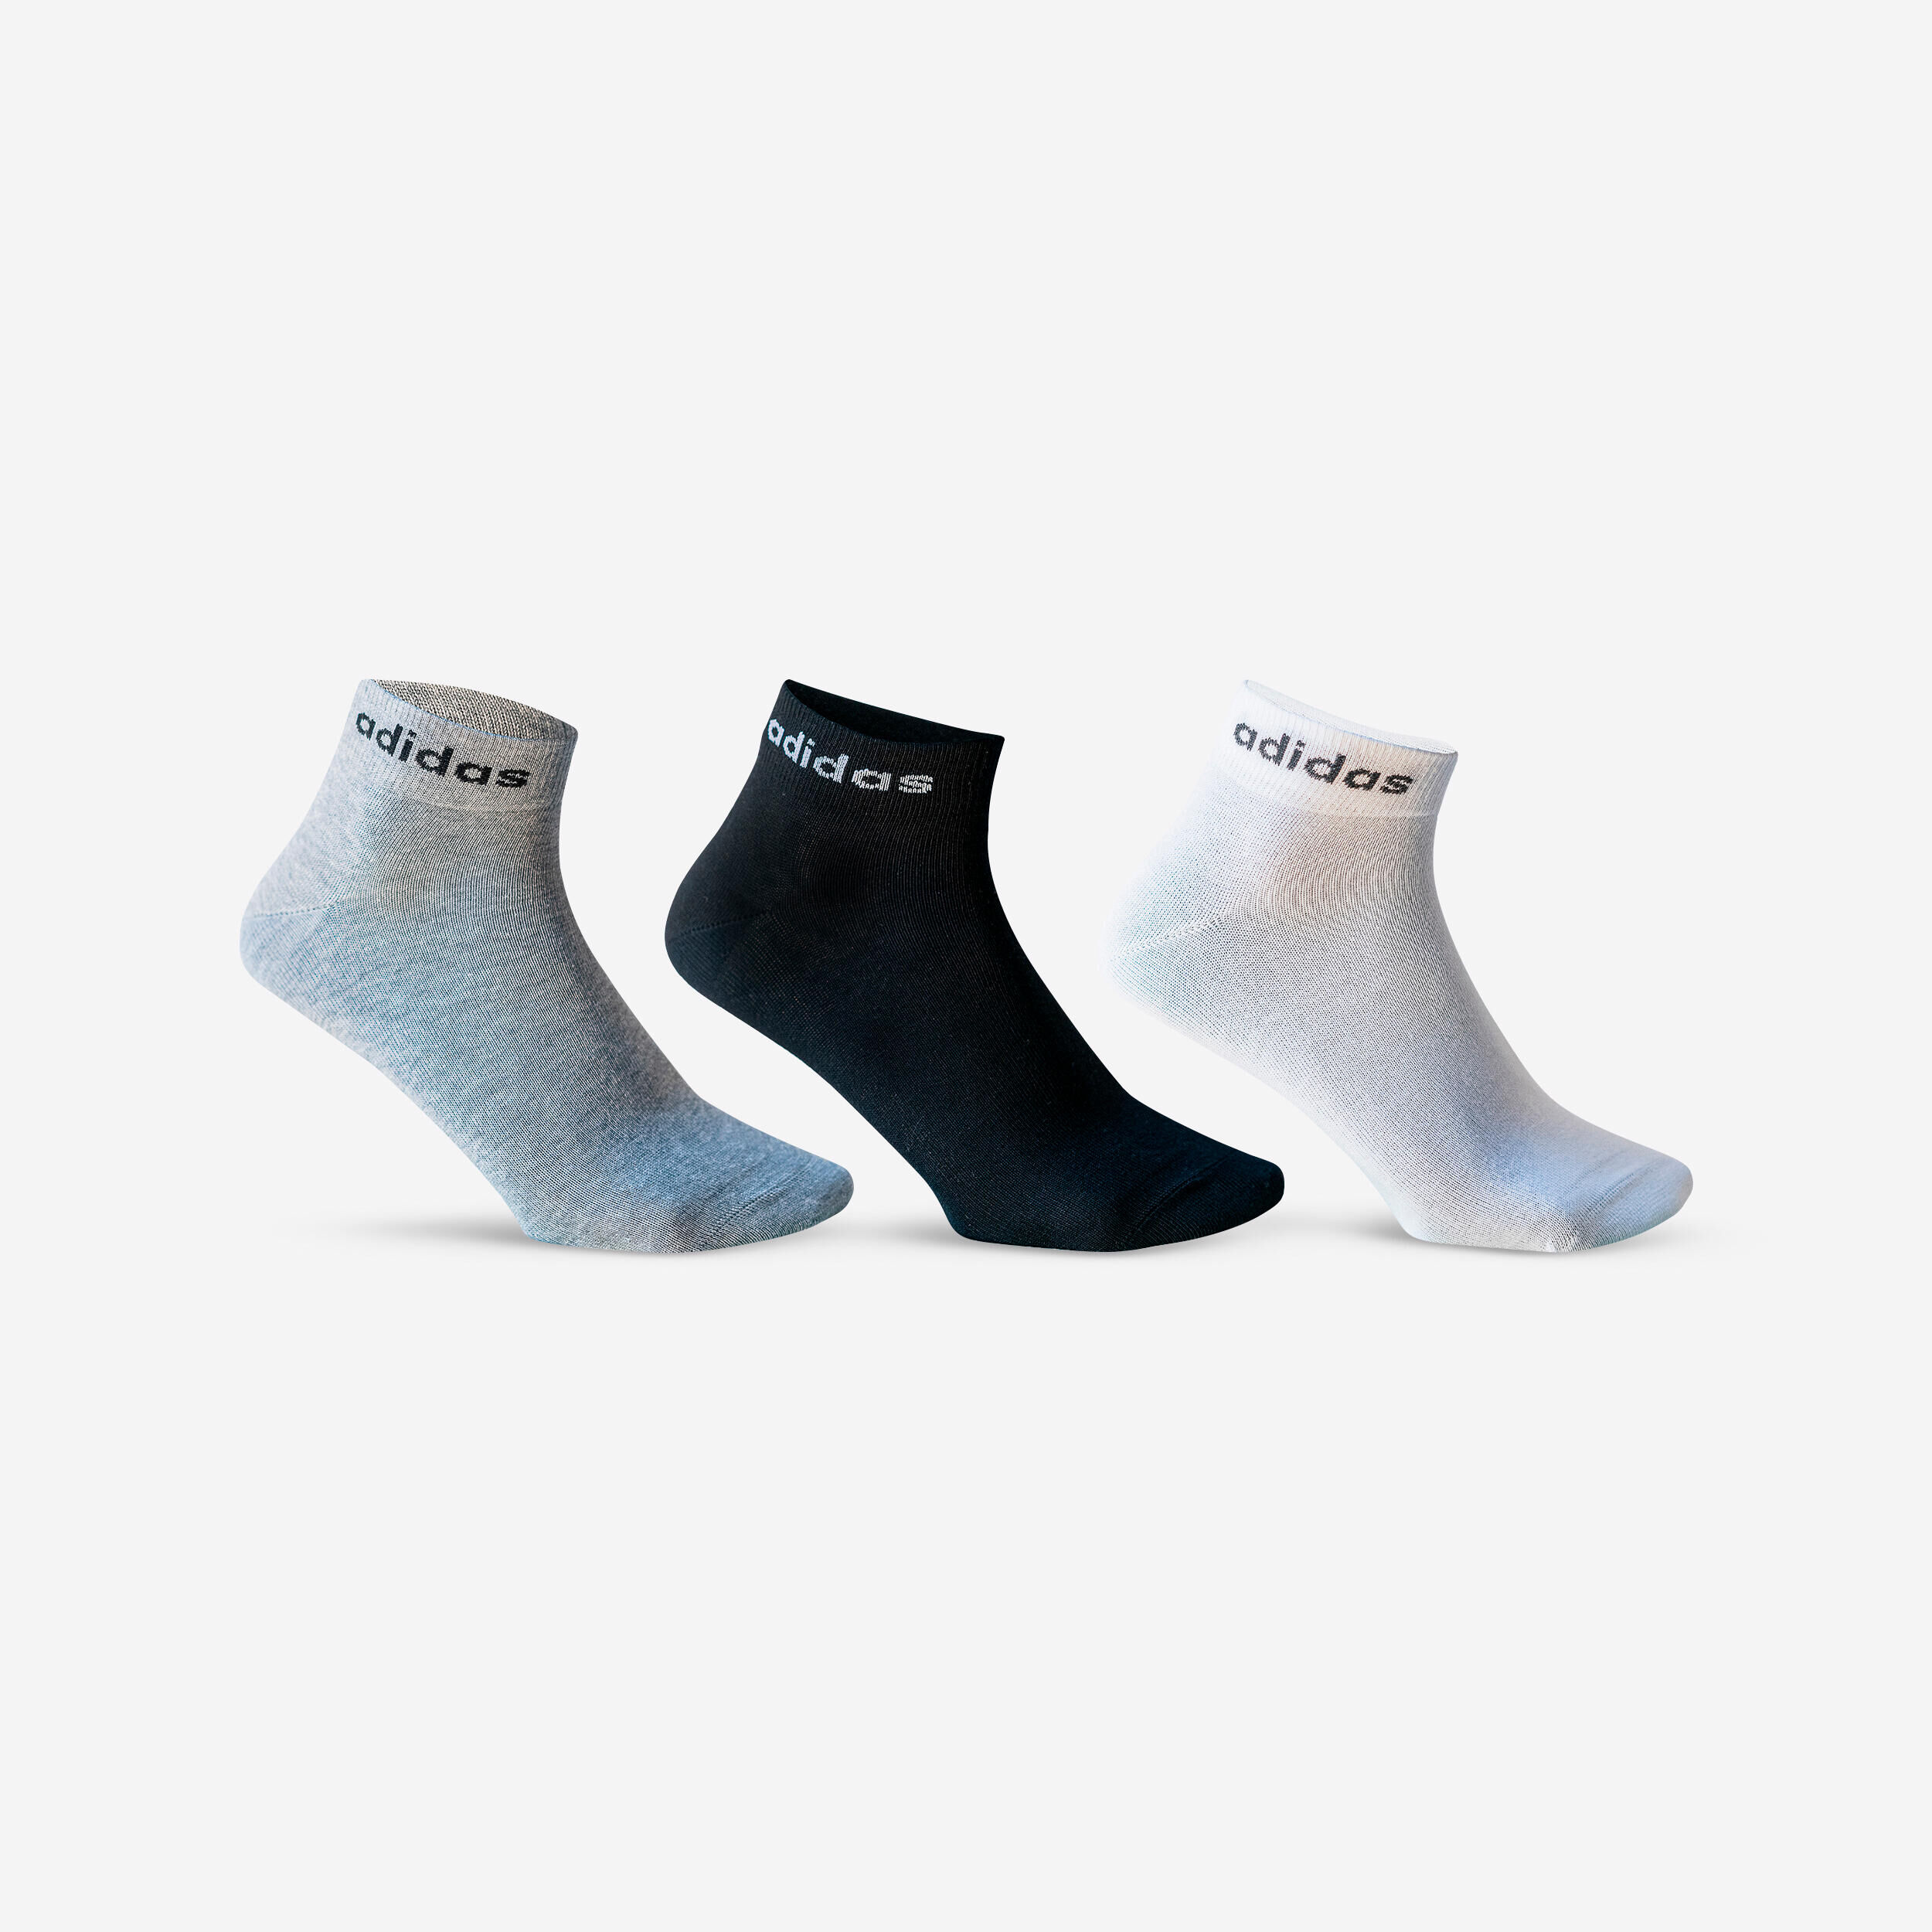 ADIDAS Mid Sports Socks Tri-Pack - Black/White/Grey